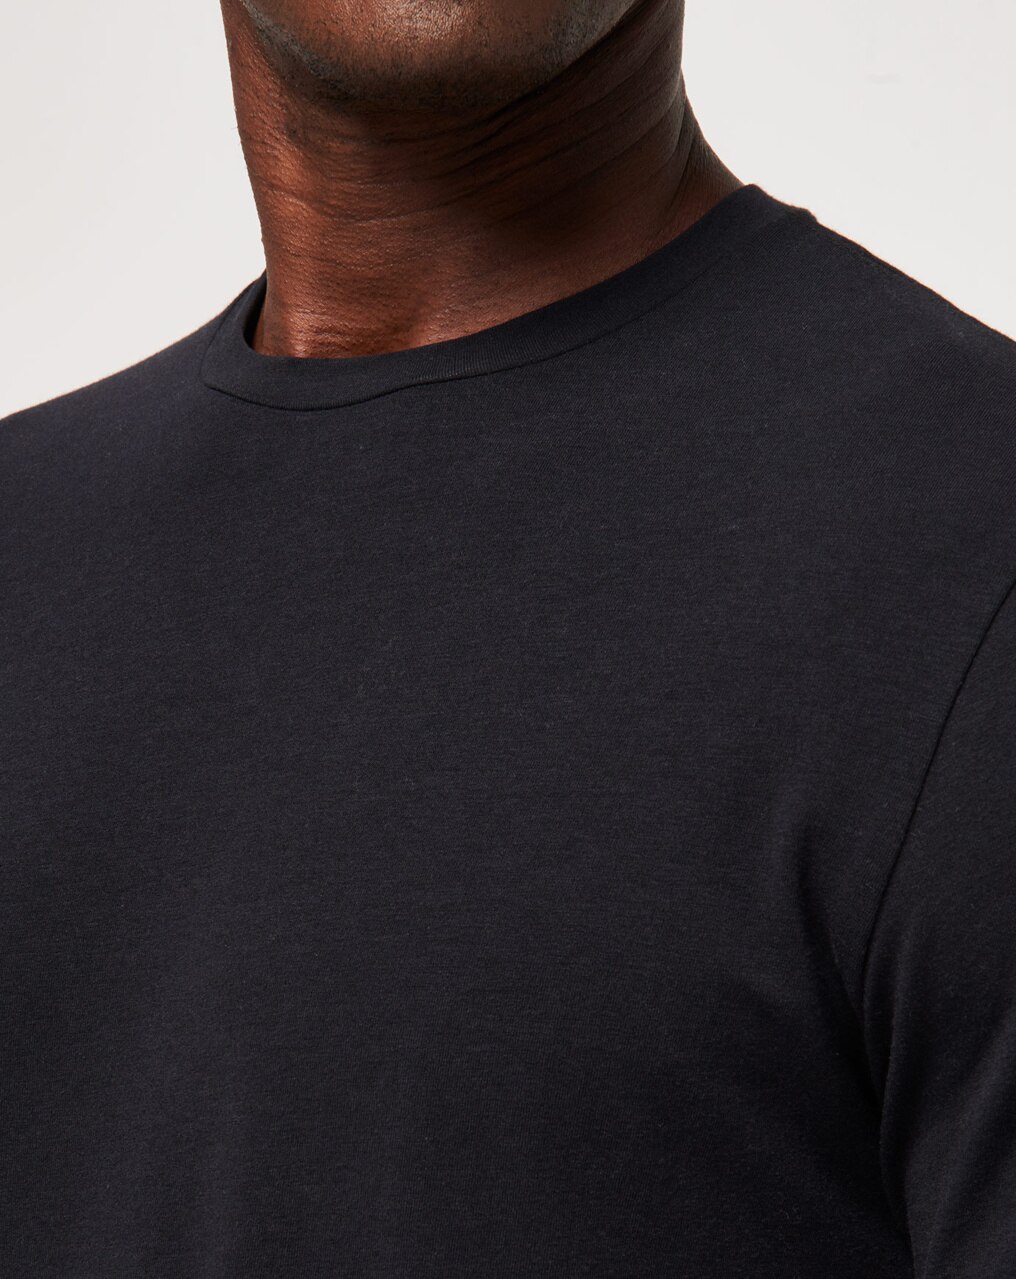 Criminal Damage Splatter Reflective Black T-Shirt - Clothing from